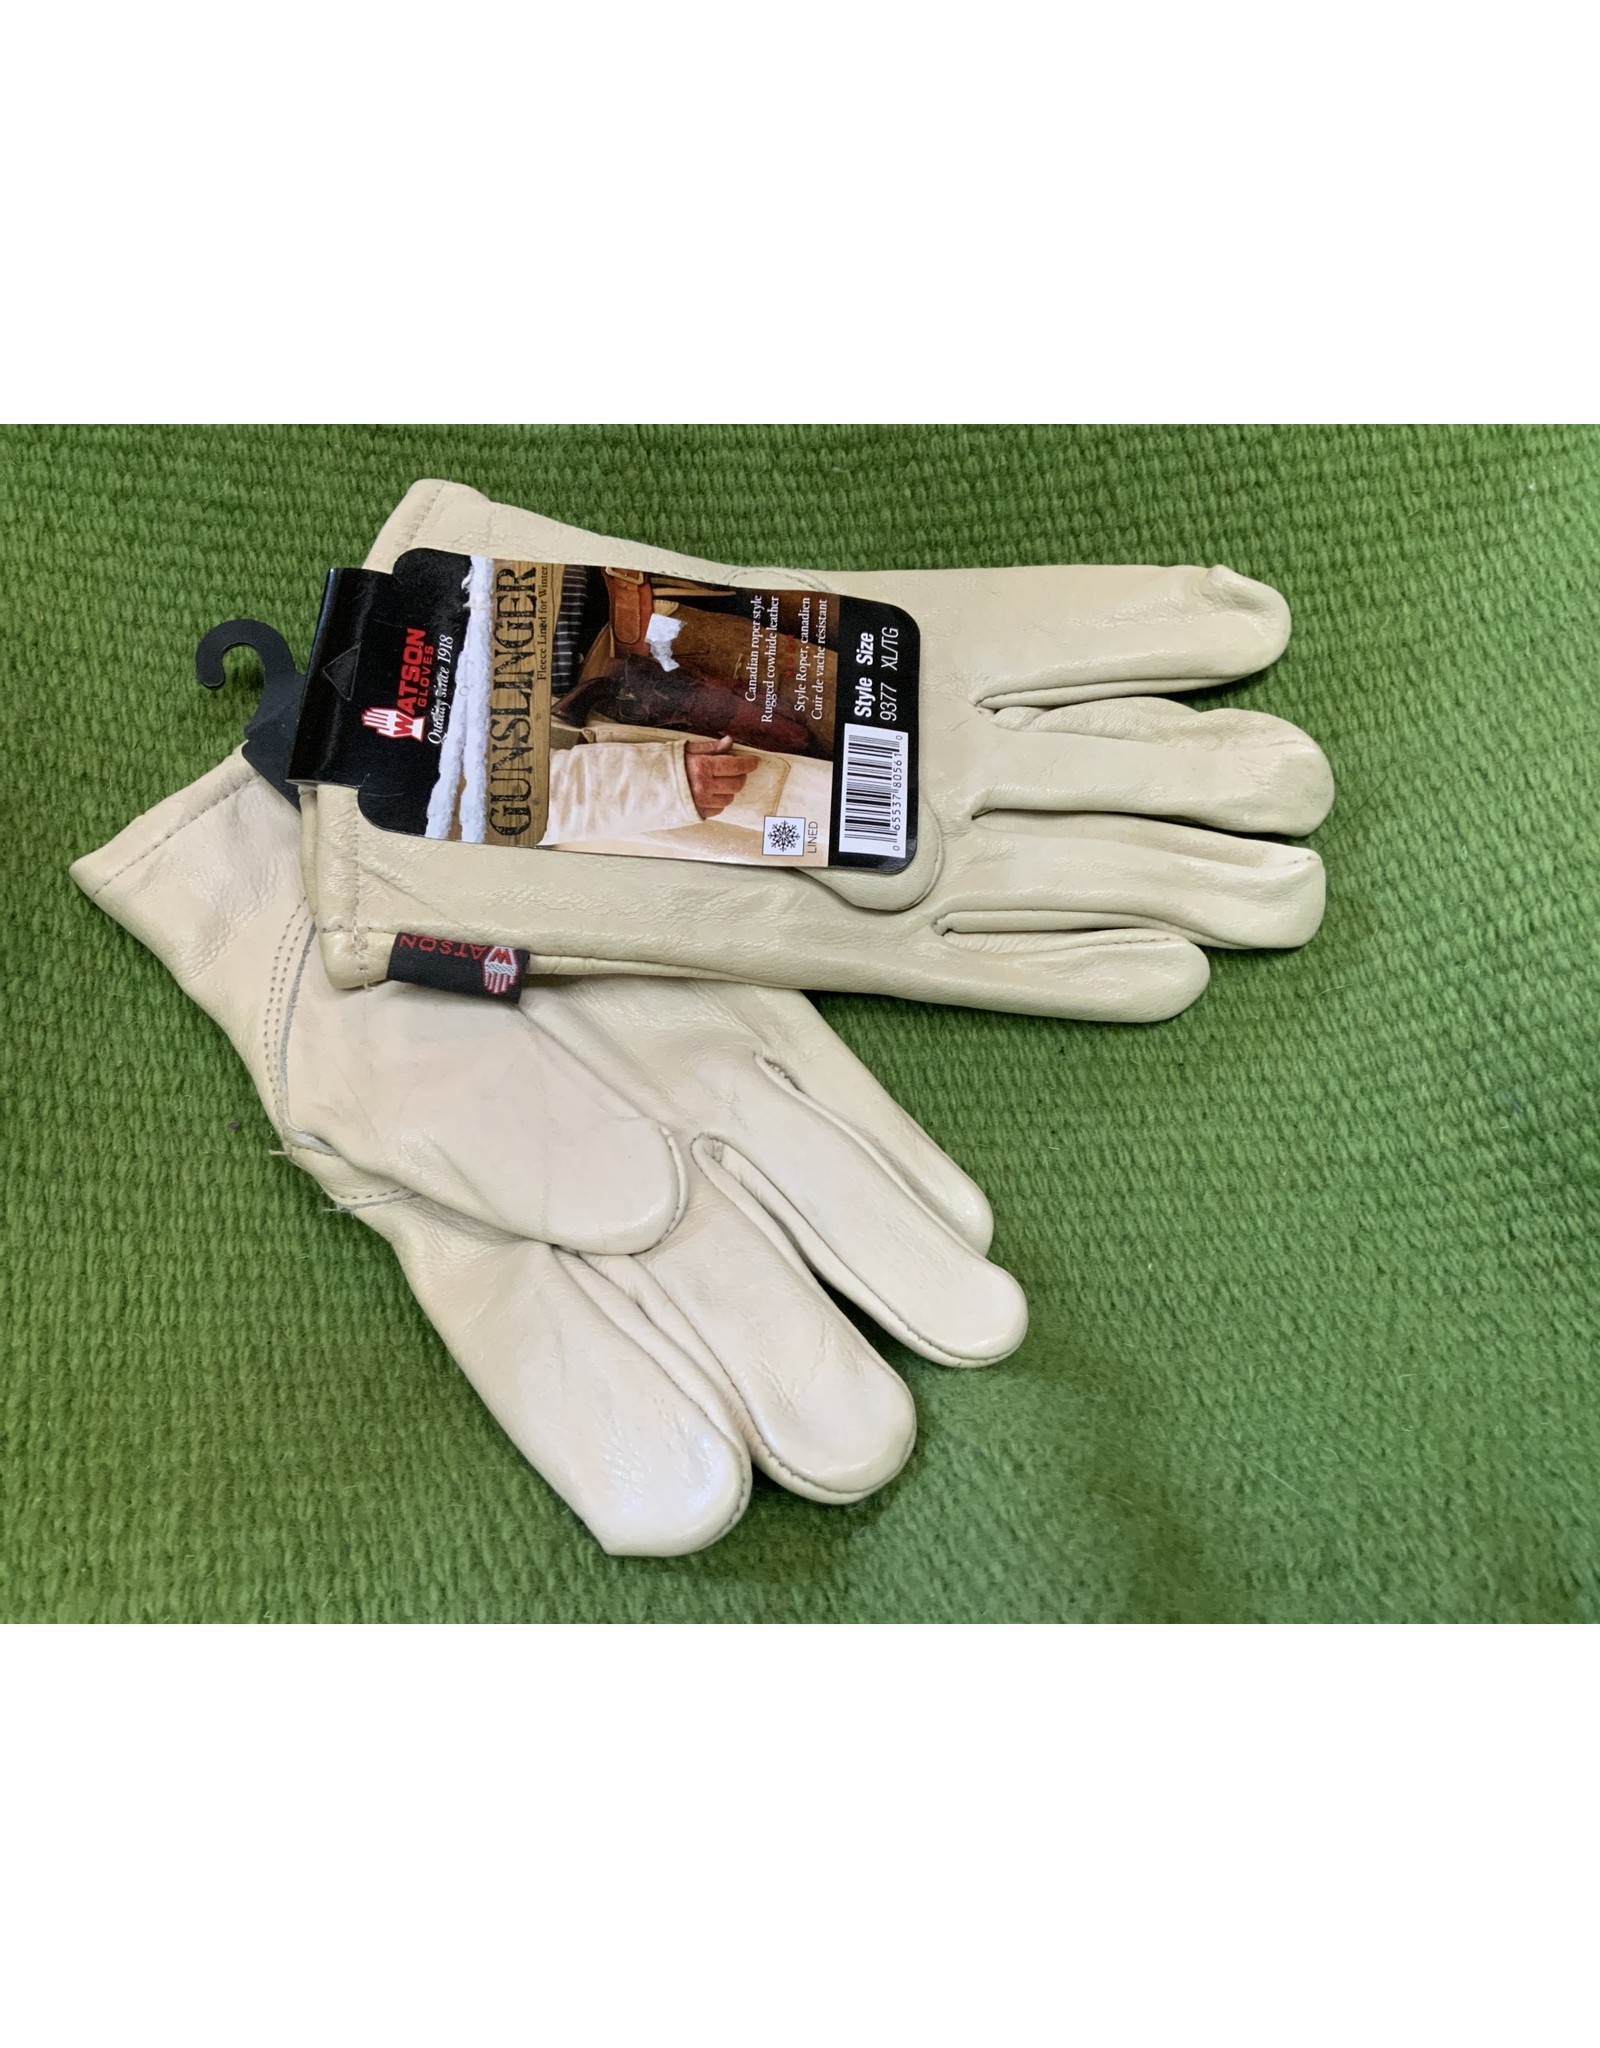 Watson Gloves Gloves*Gunslinger Fleece Lined- 9377-X